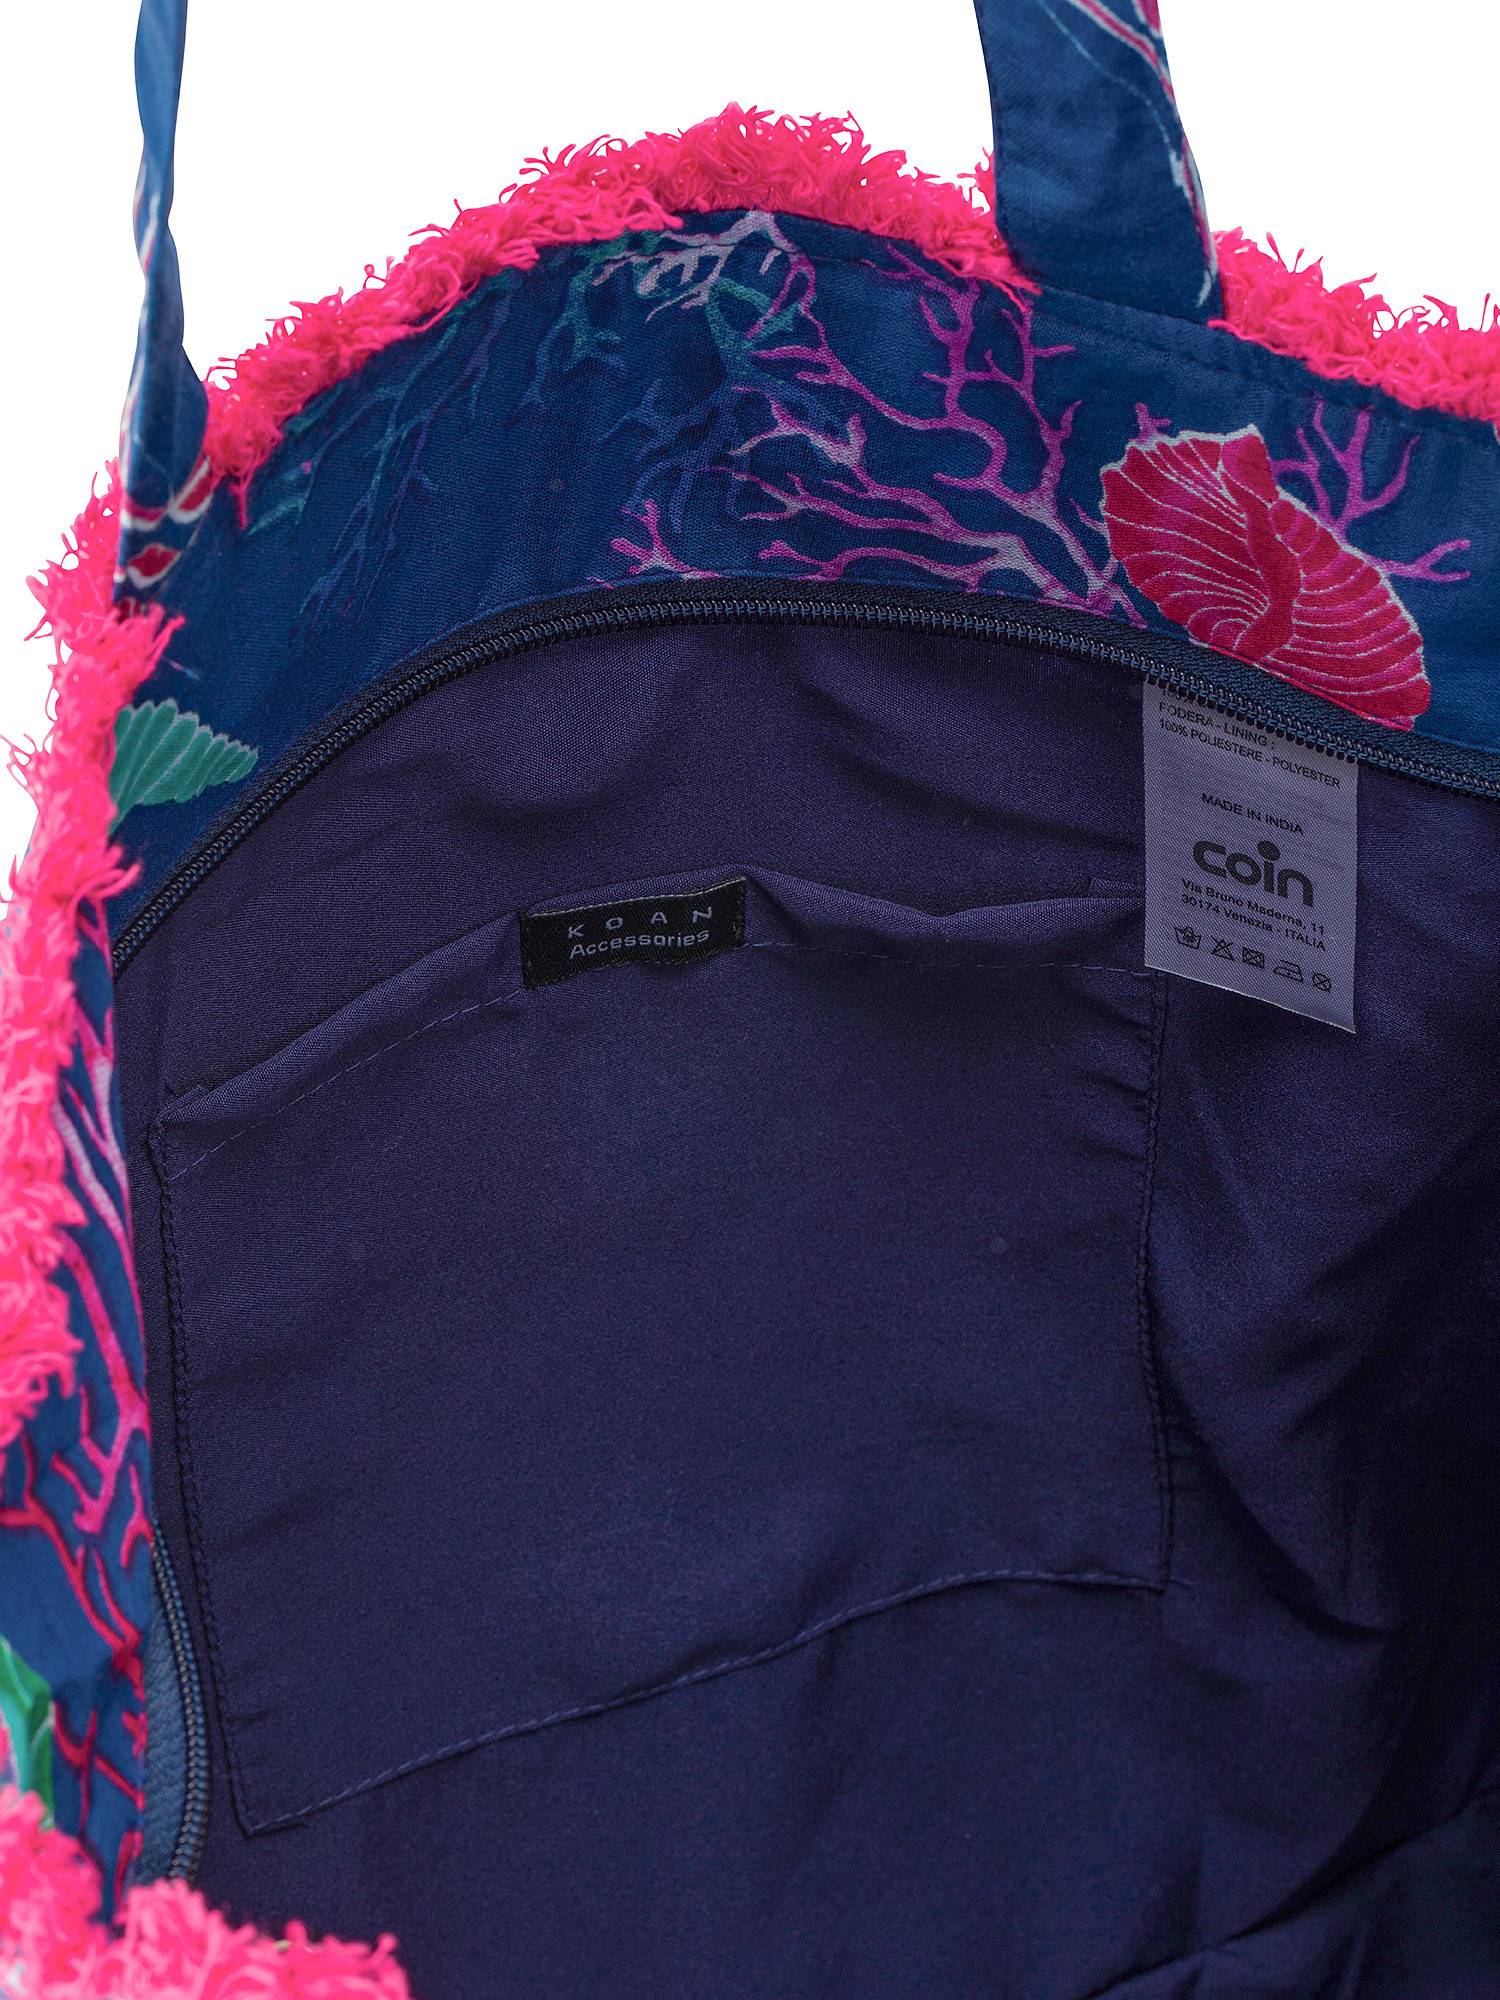 Koan - Bag with marine print, Dark Blue, large image number 2